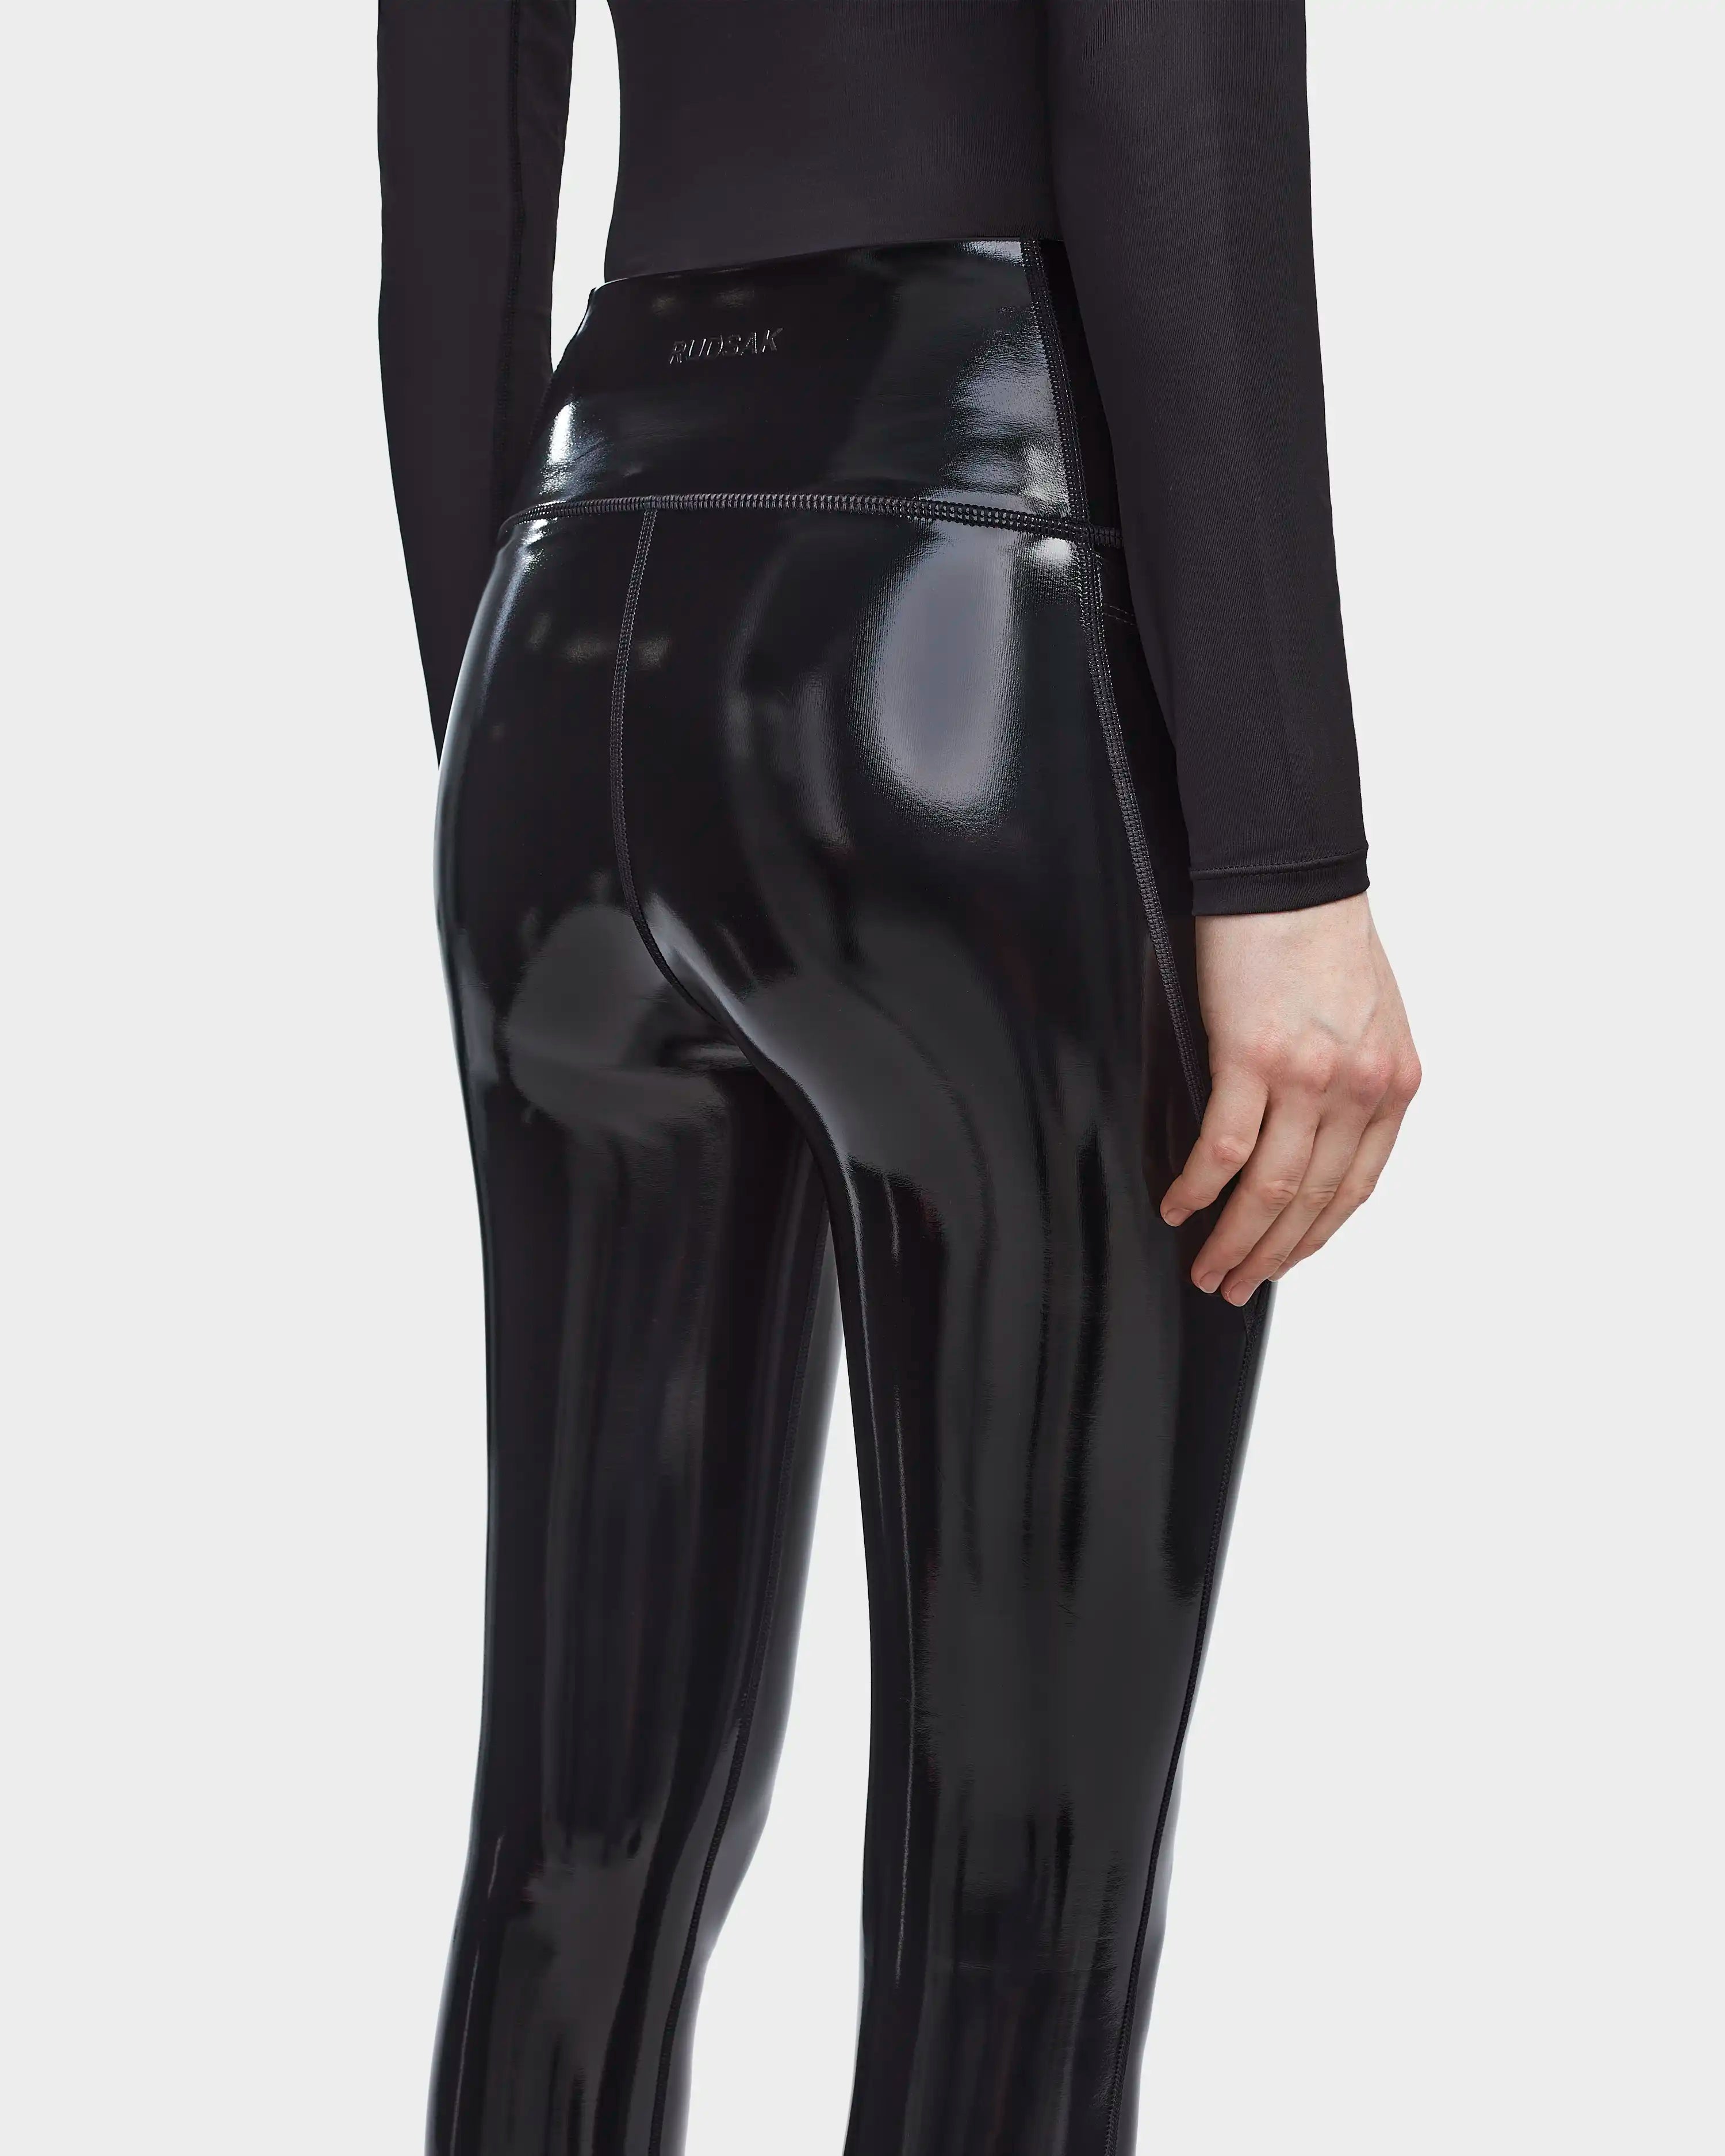 Commando shiny black patent leather leggings